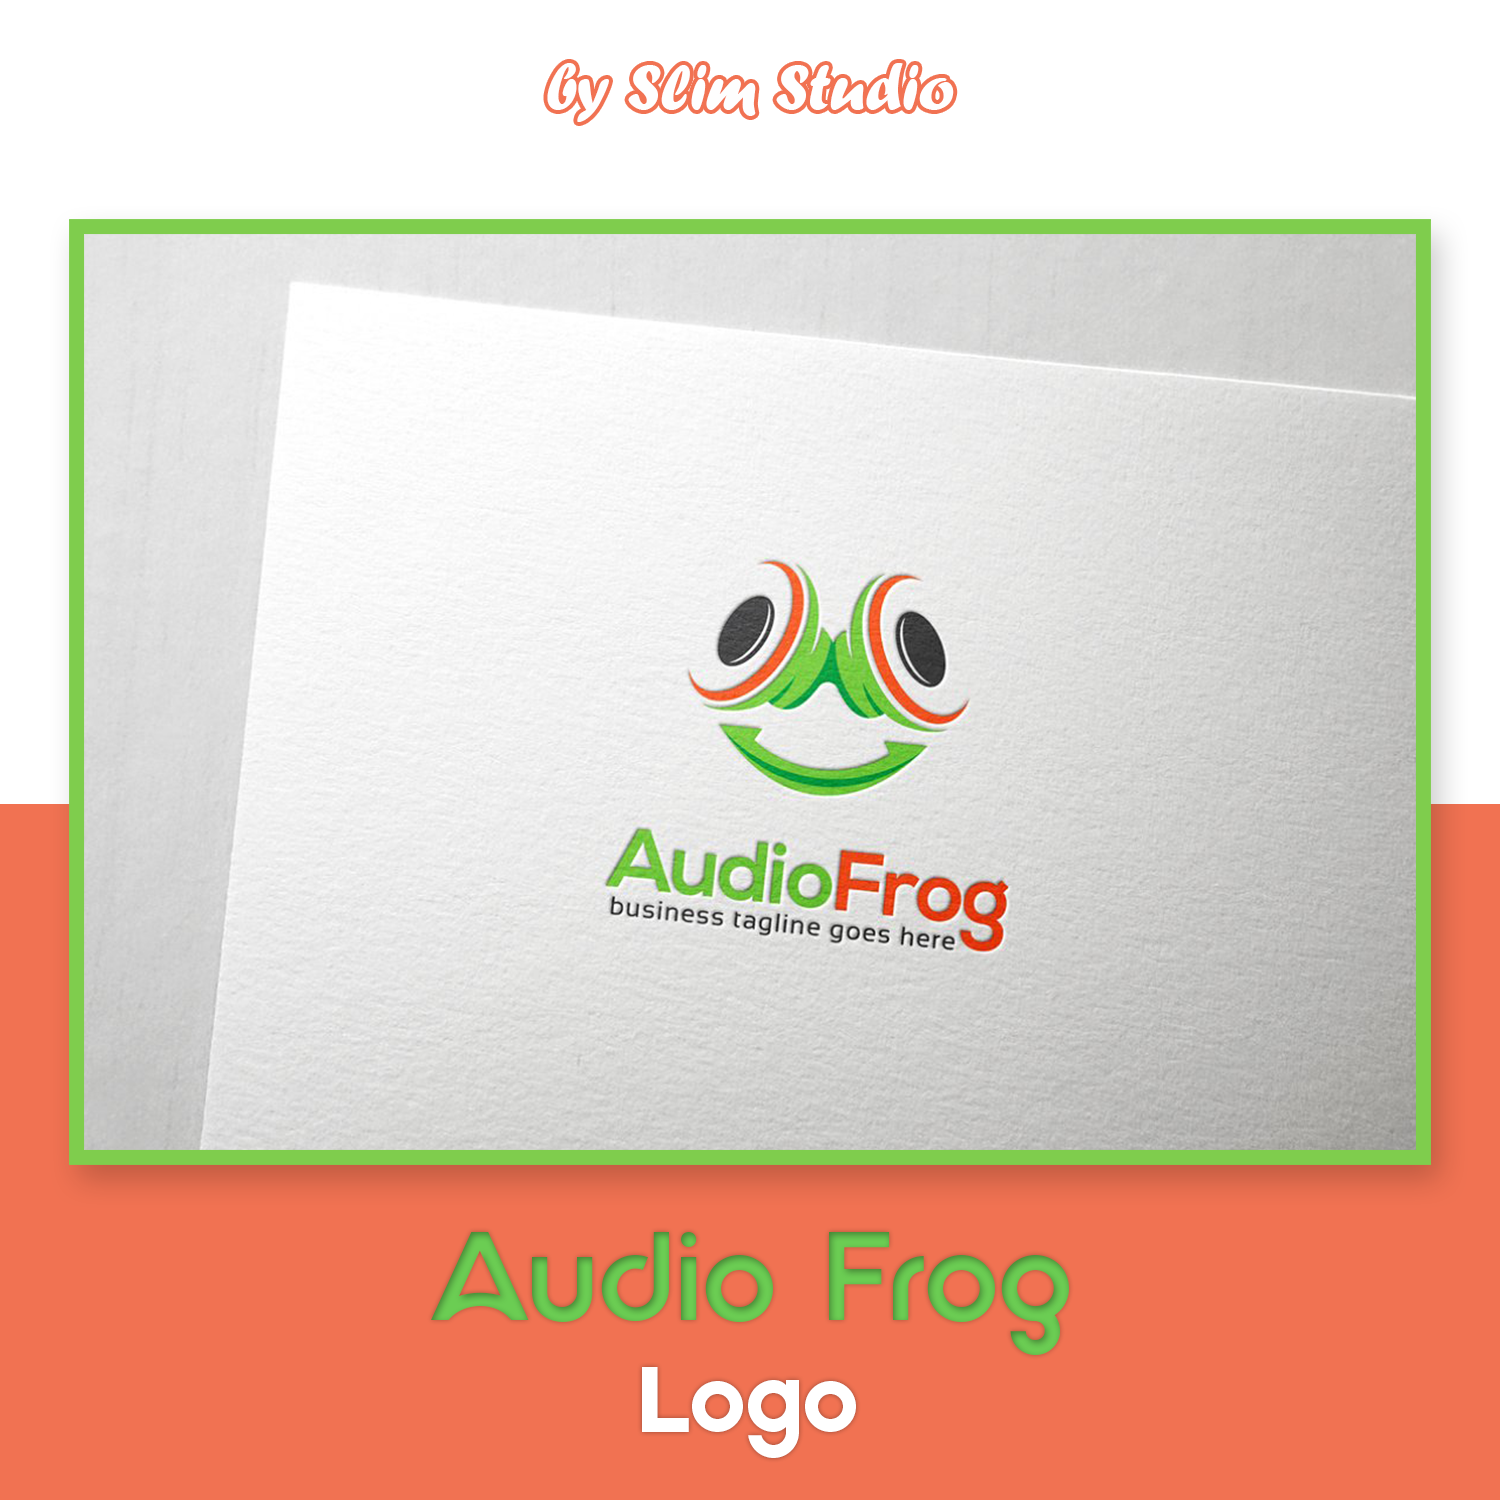 Audio Frog Logo.